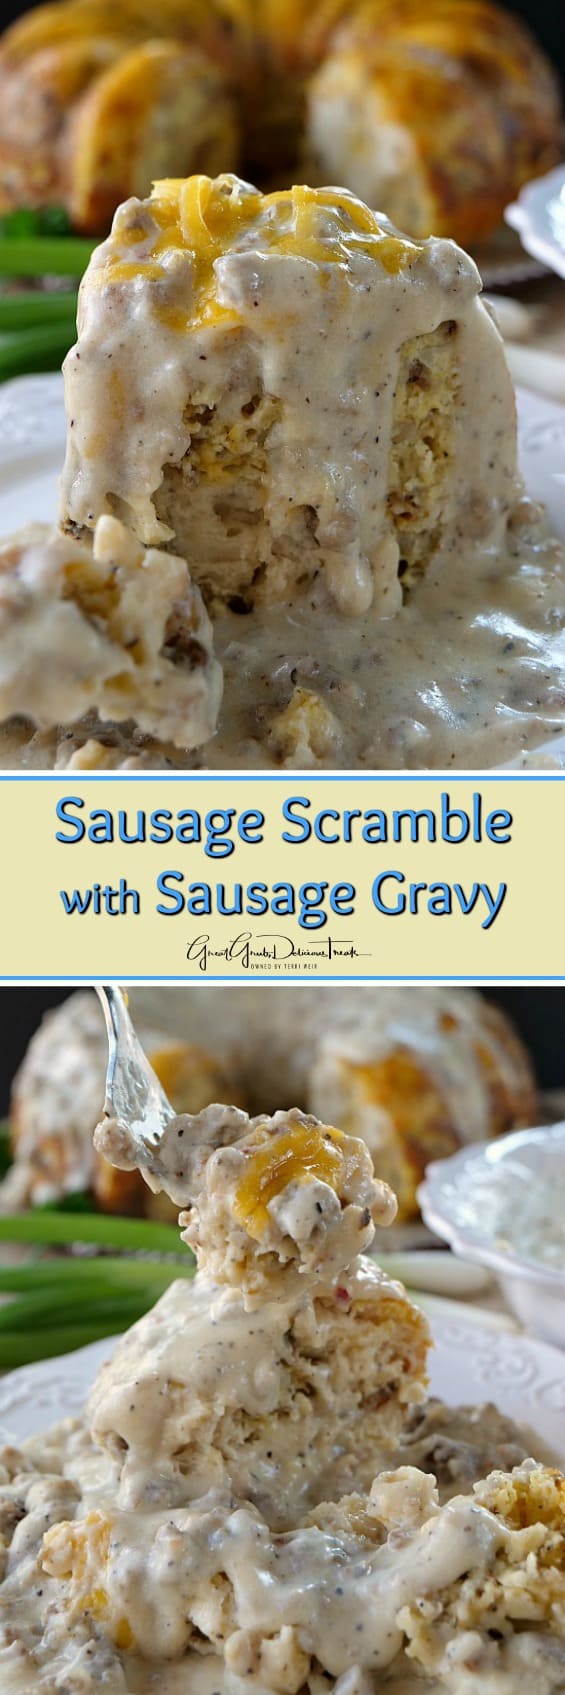 Sausage Scramble with Sausage Gravy